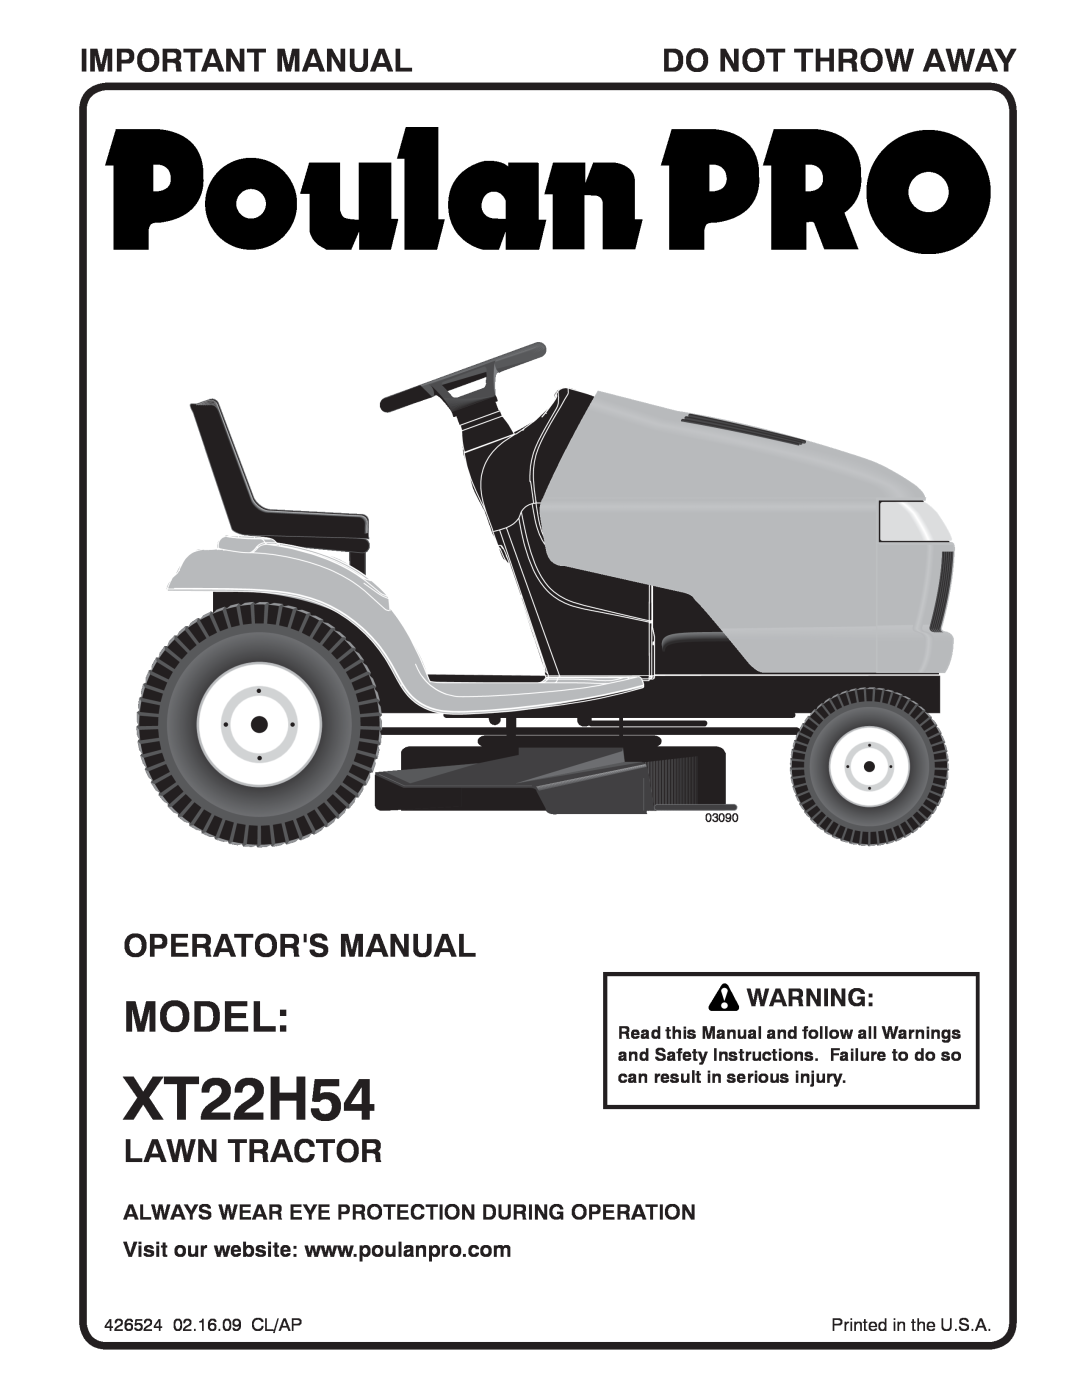 Poulan XT22H54 manual Model, Important Manual, Do Not Throw Away, Operators Manual, Lawn Tractor, 03090 